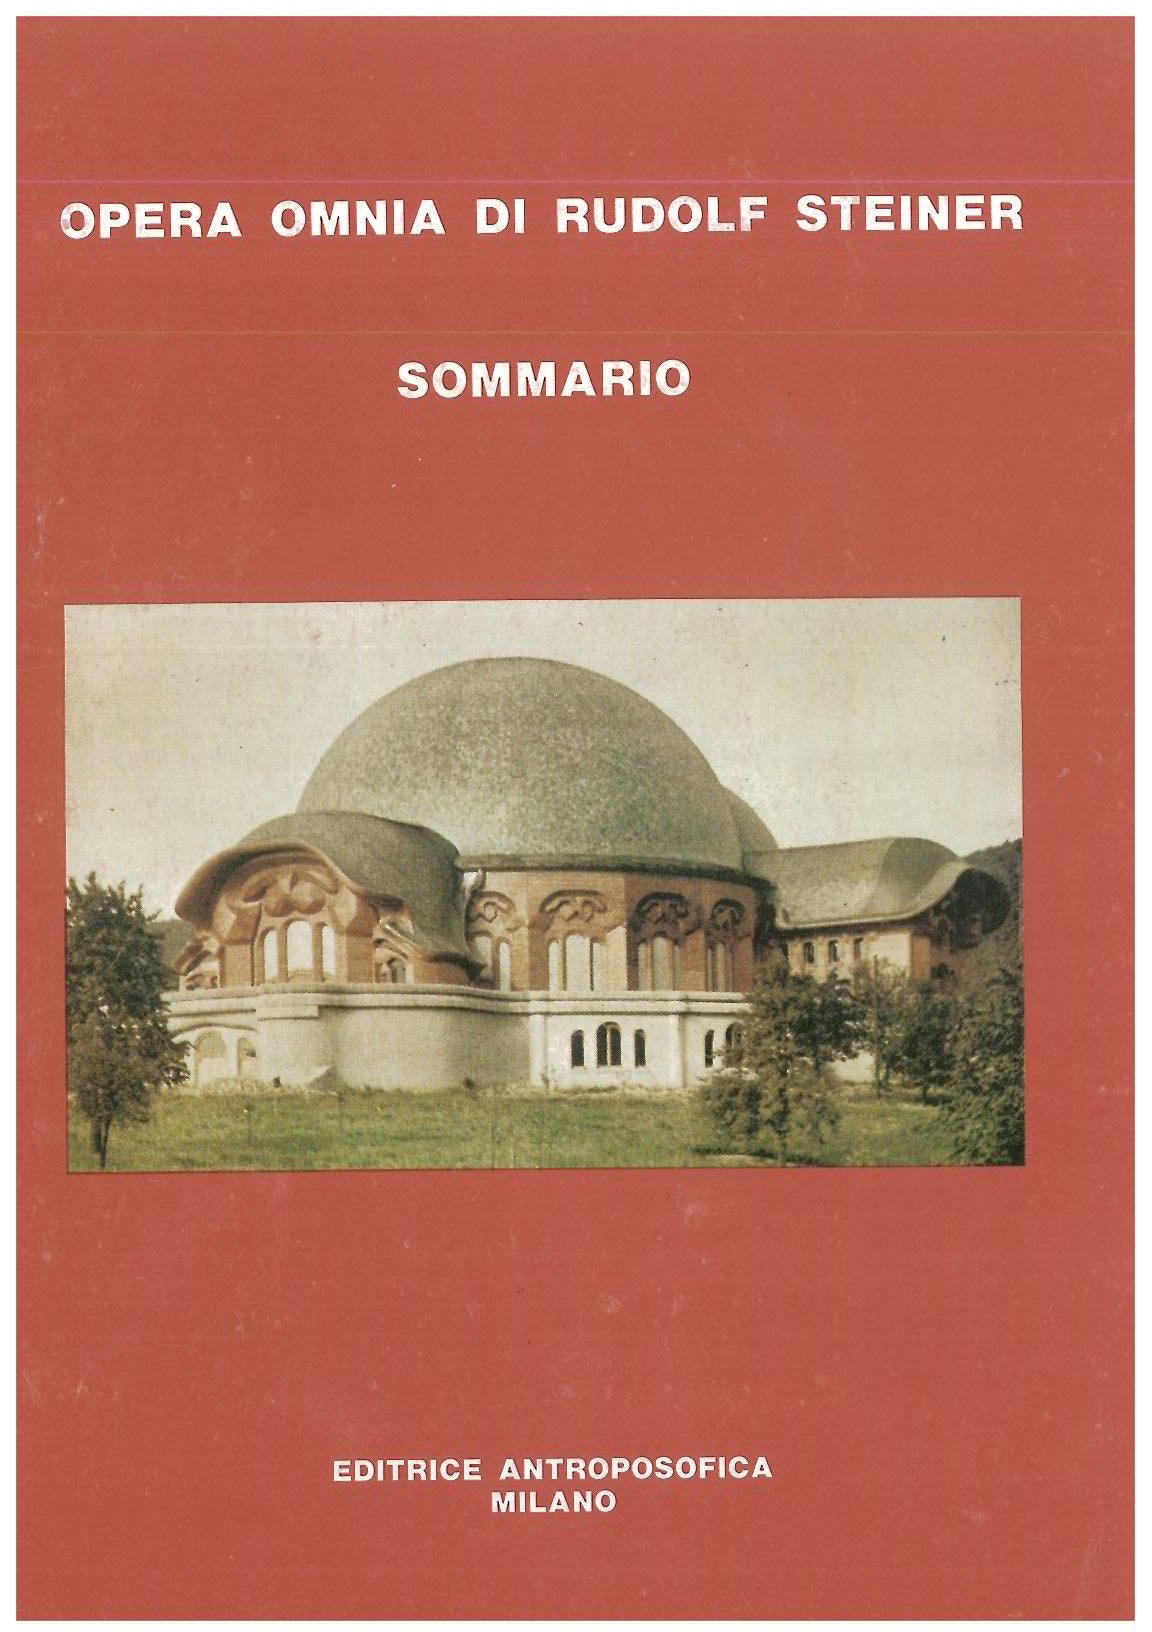 Opera Omnia di Rudolf Steiner, Sommario